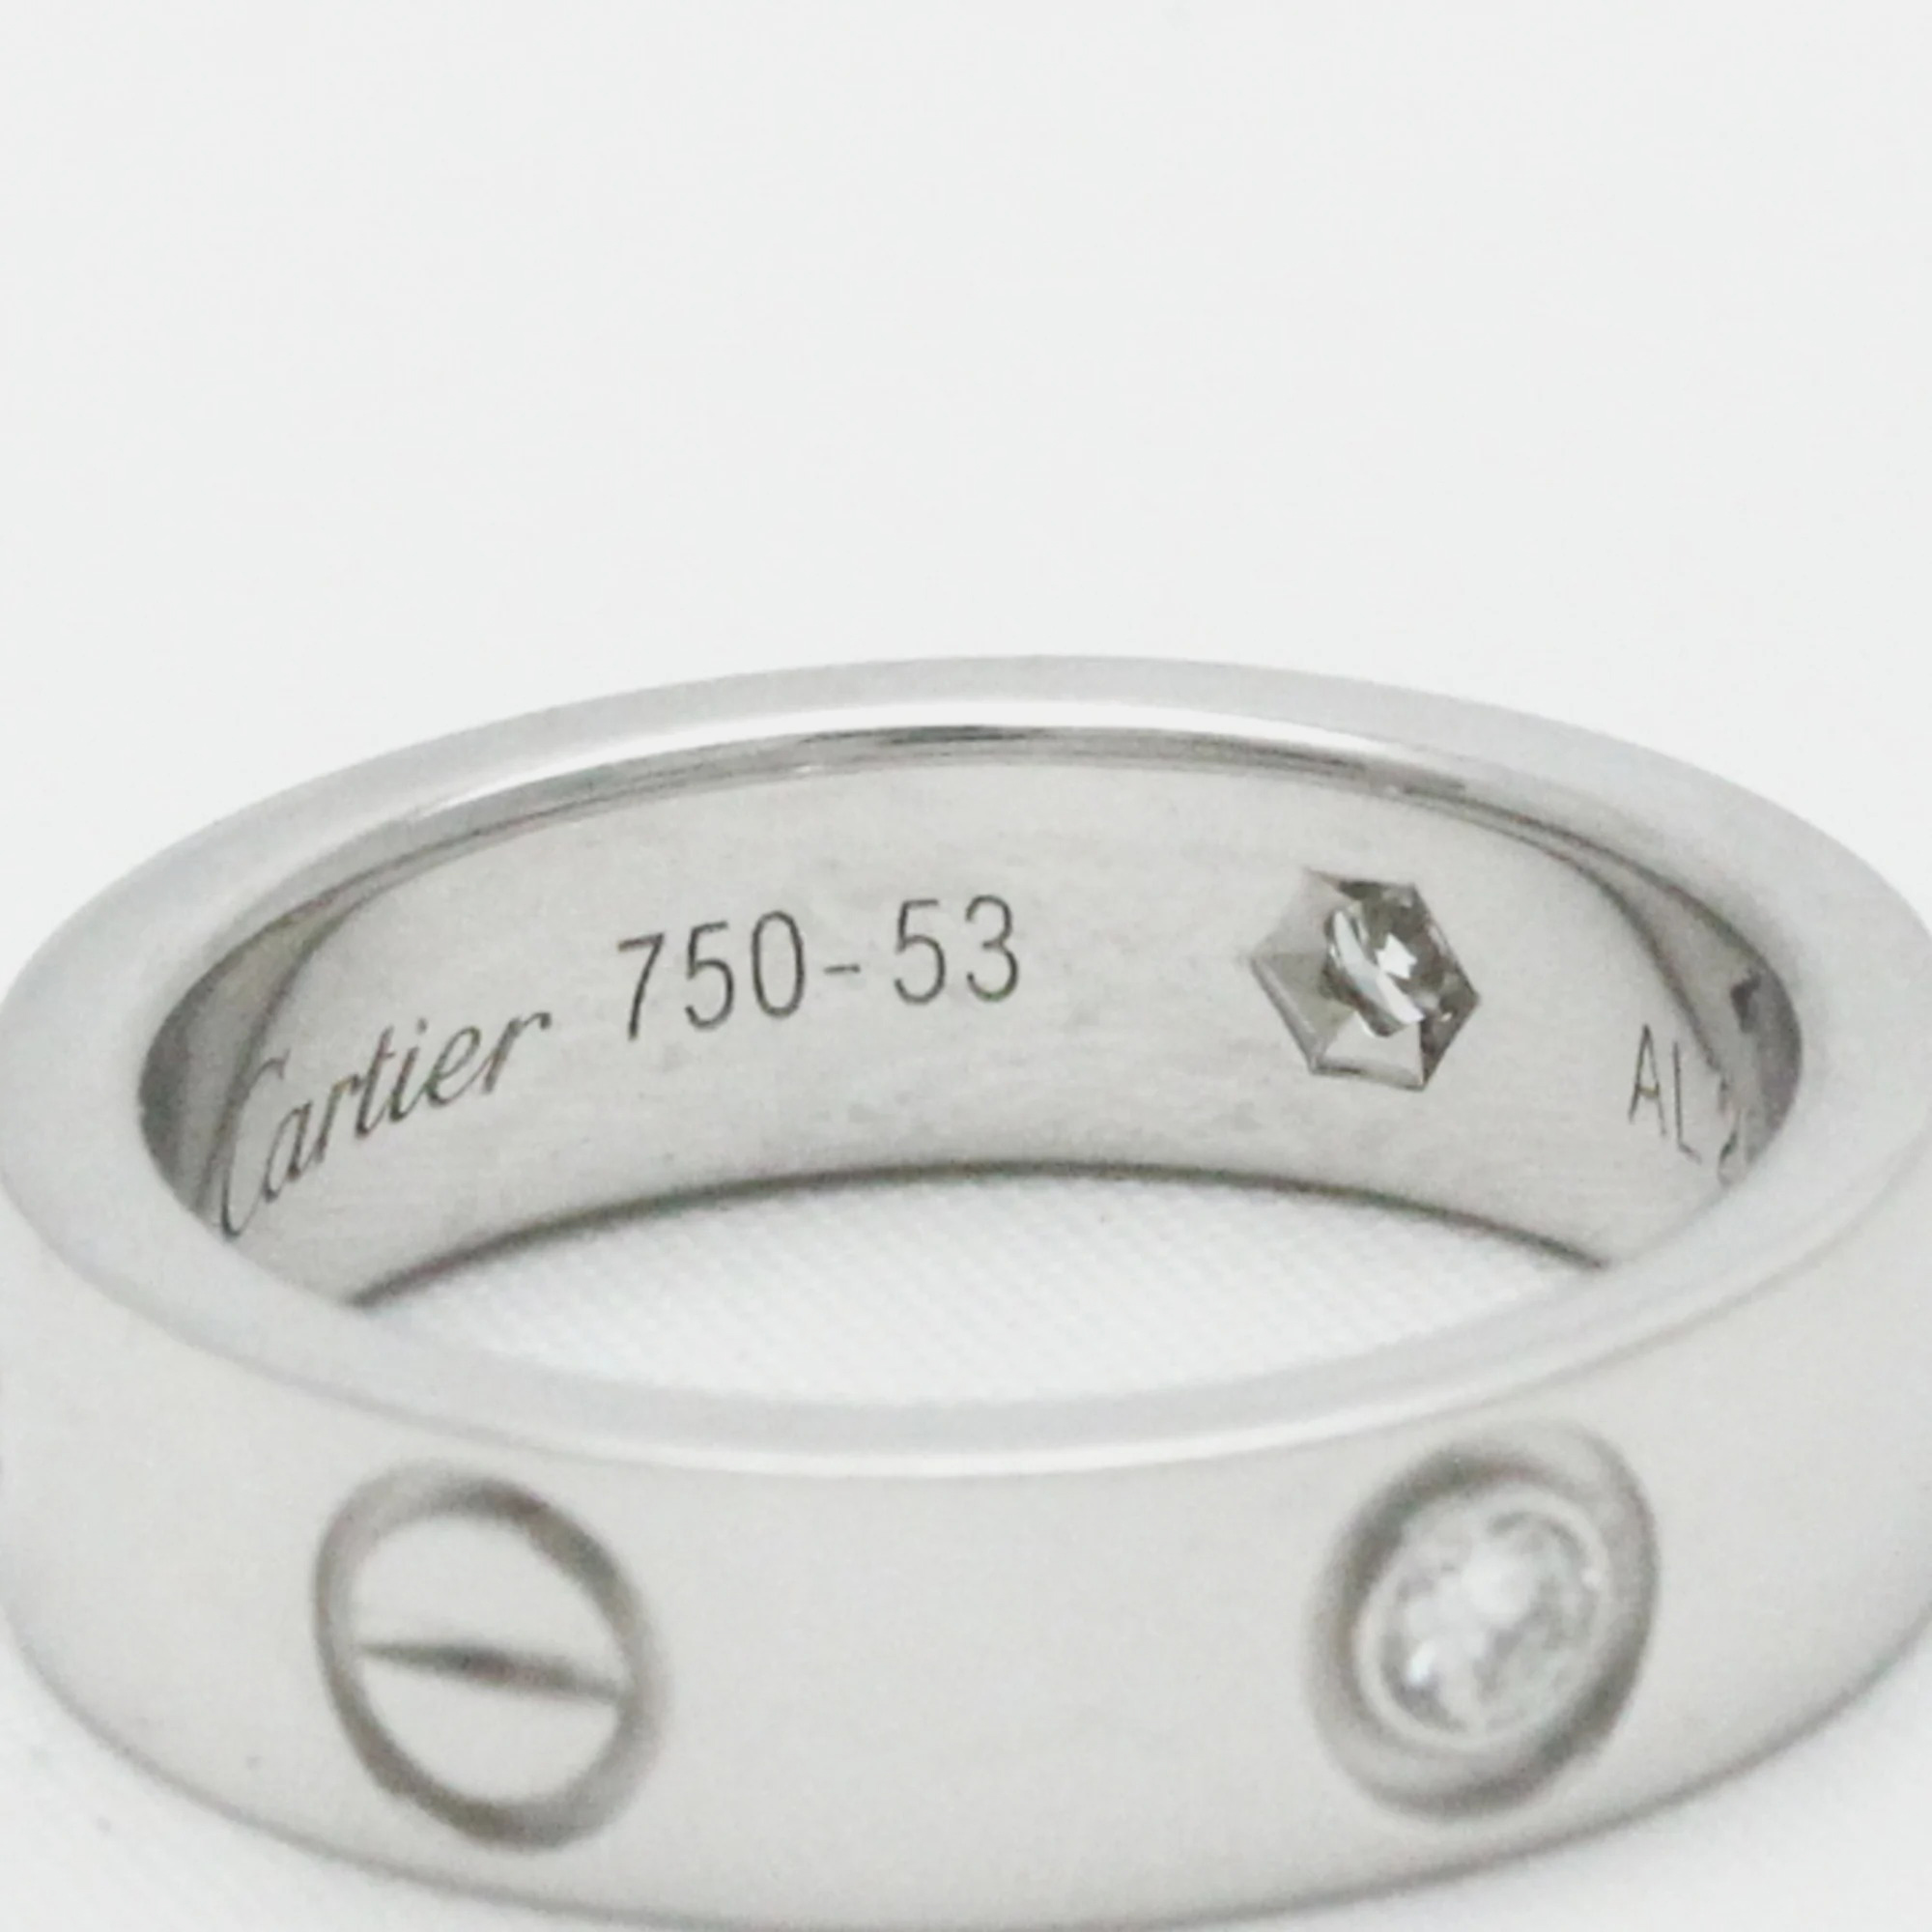 Cartier Love Vintage 18K White Gold Diamond Ring EU 53